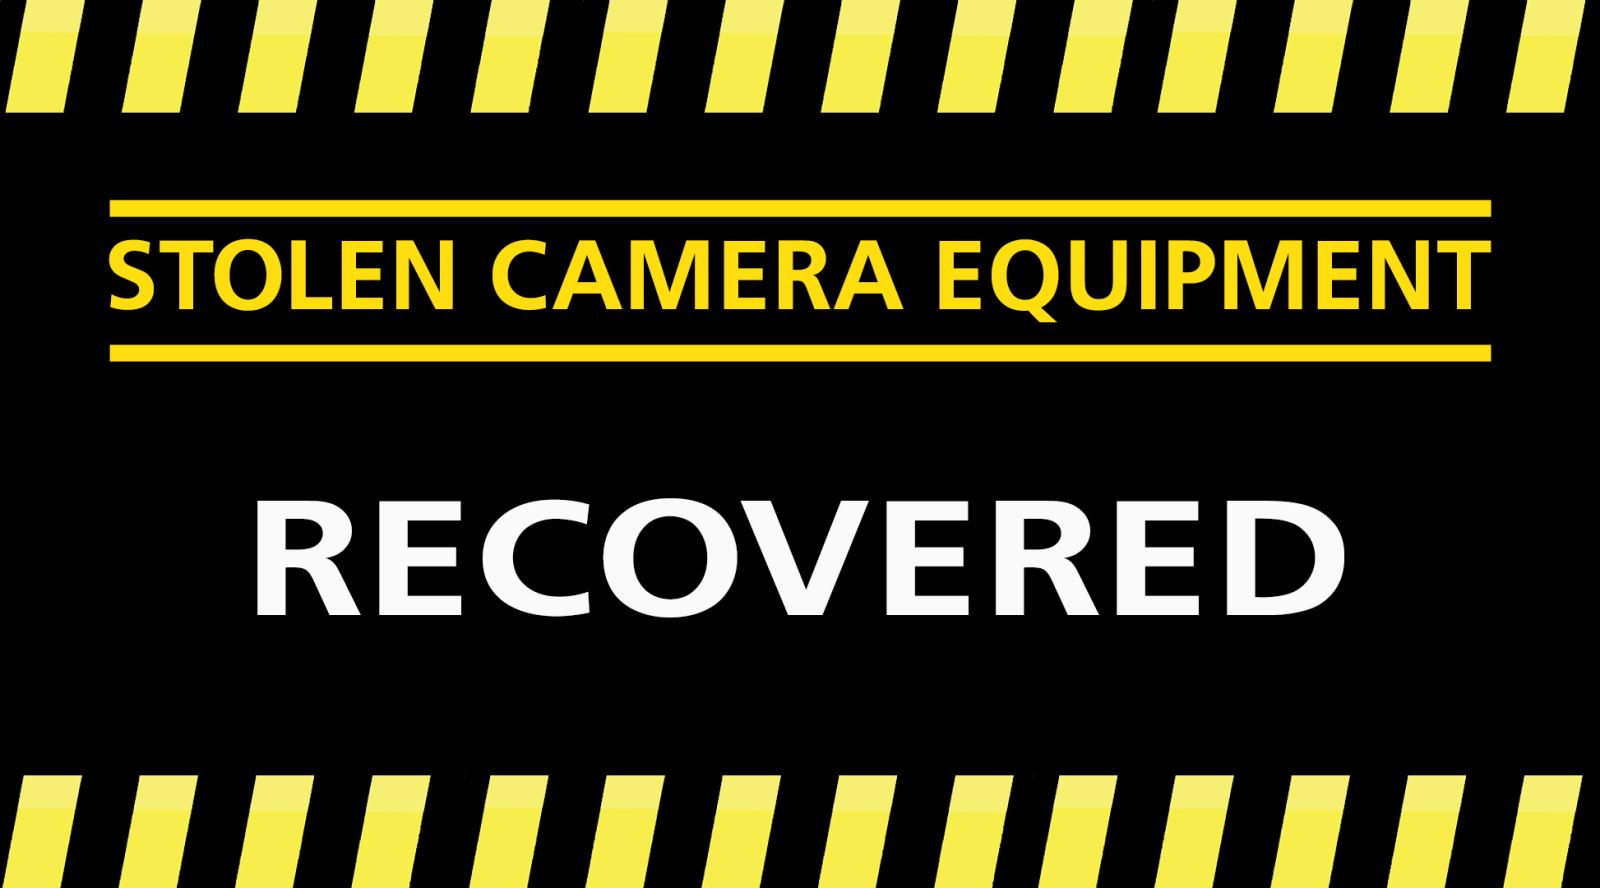 Camera Kit Stolen Recovered